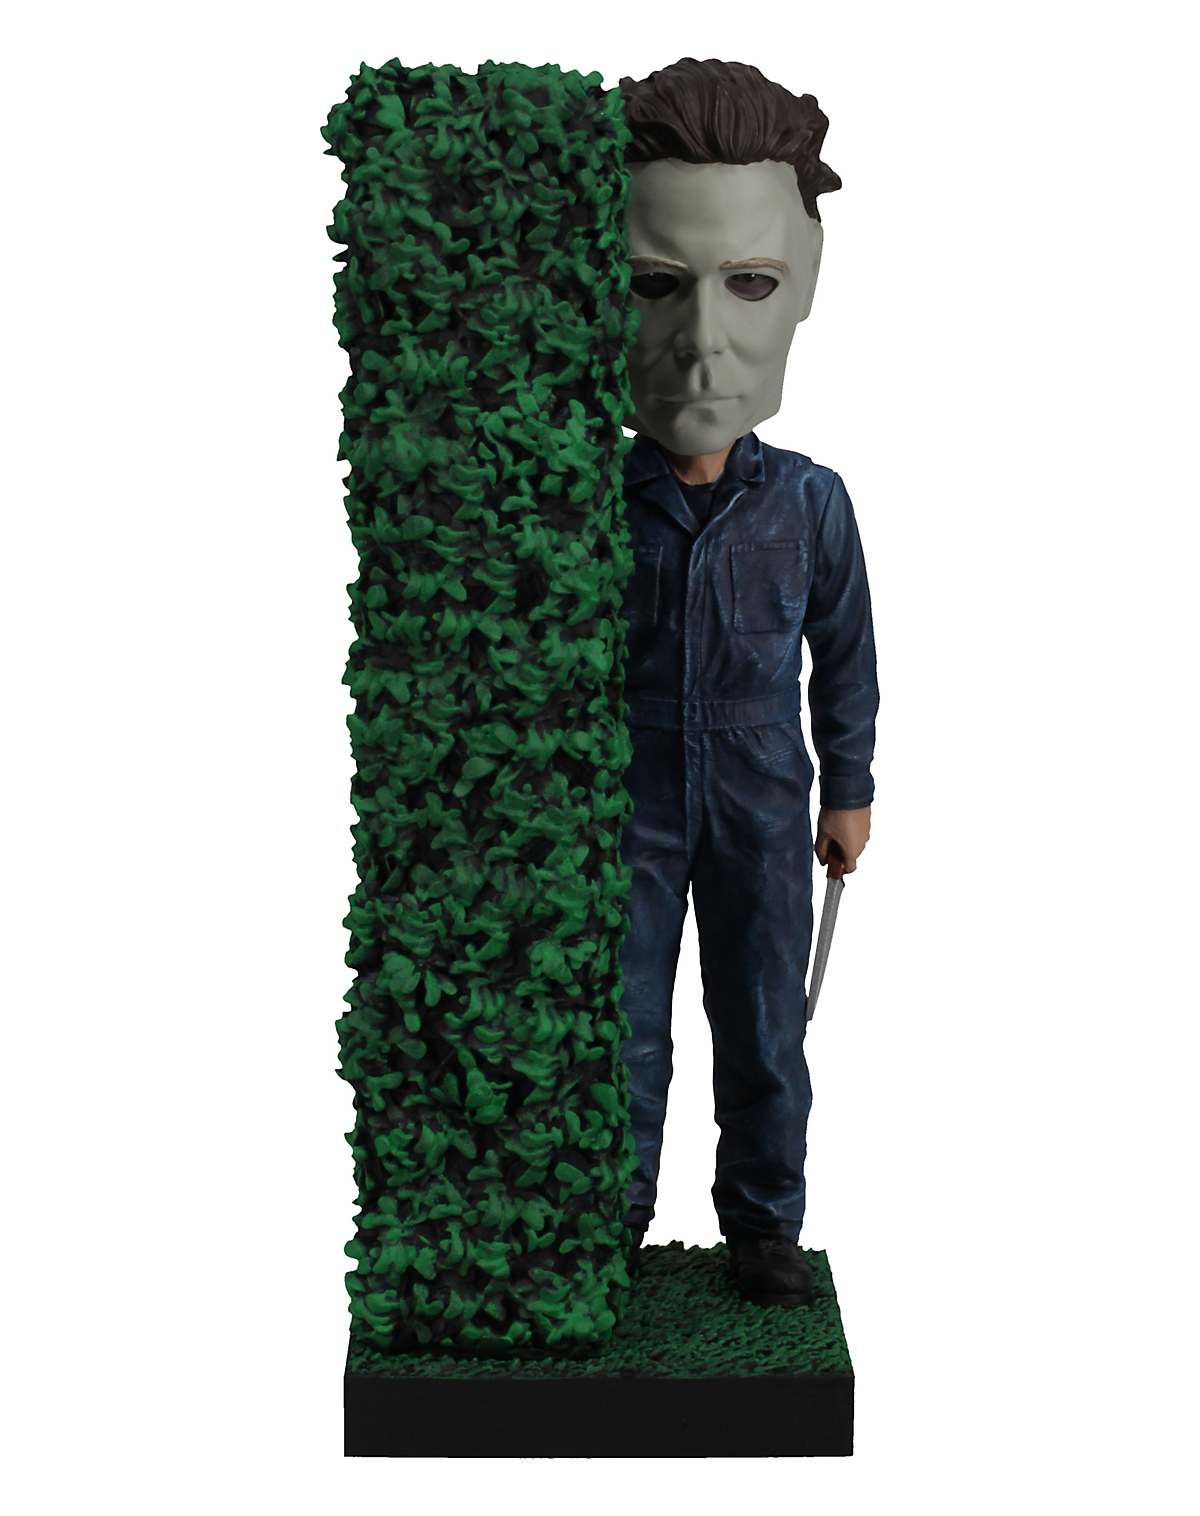 Michael Myers Bobblehead Statue - Halloween